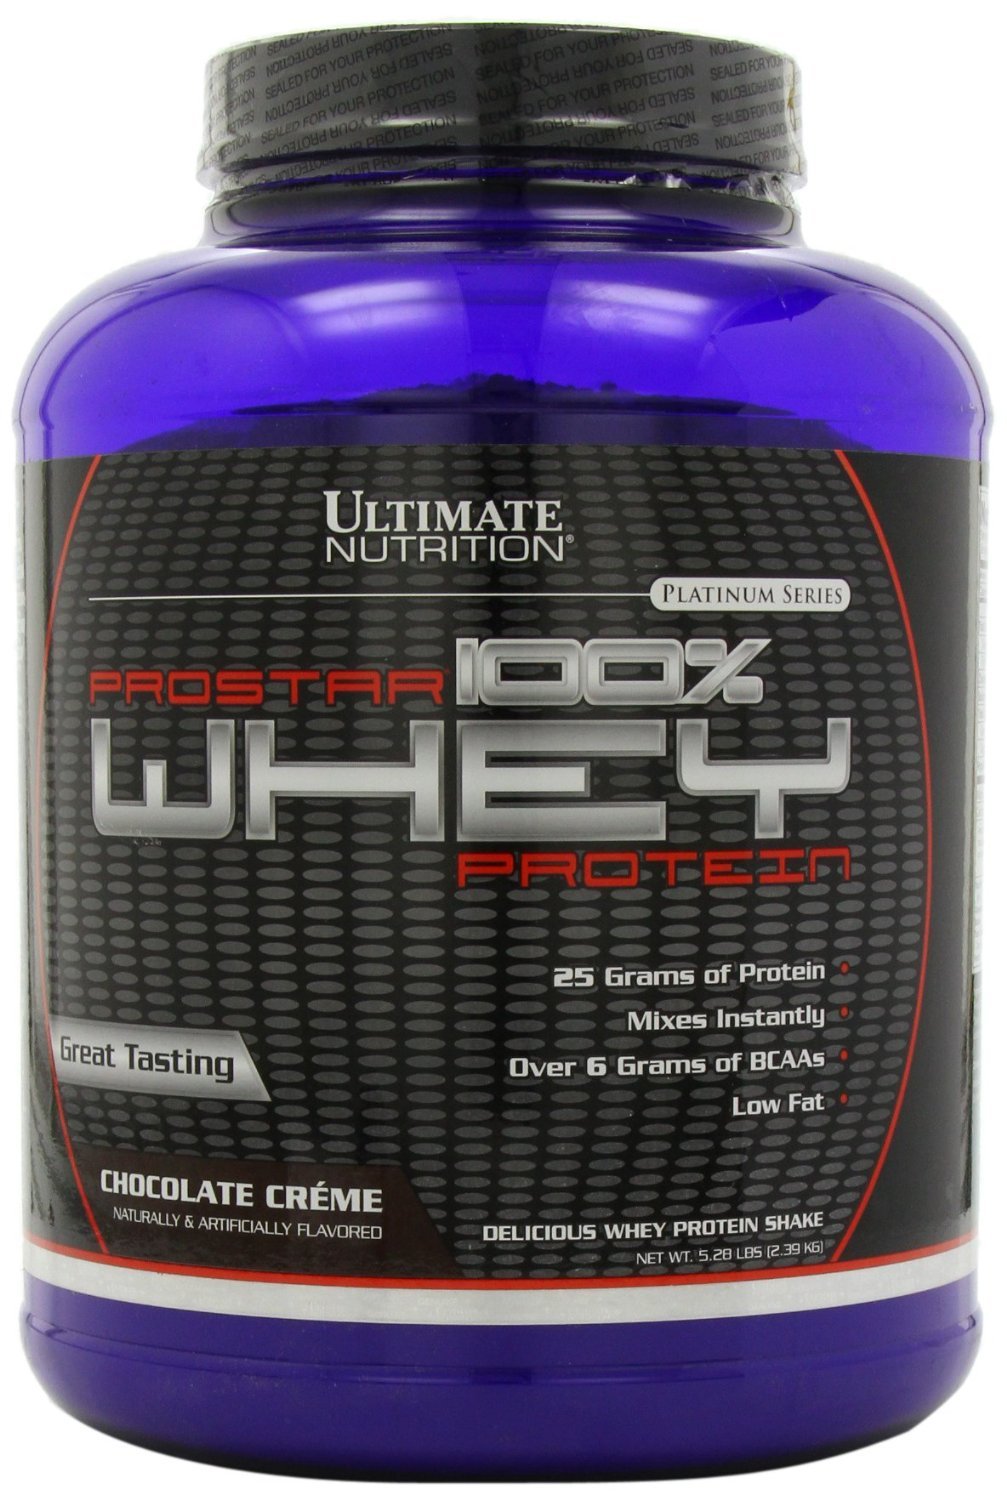 Prostar Whey, 2390 g, Ultimate Nutrition. Whey Isolate. Lean muscle mass Weight Loss स्वास्थ्य लाभ Anti-catabolic properties 